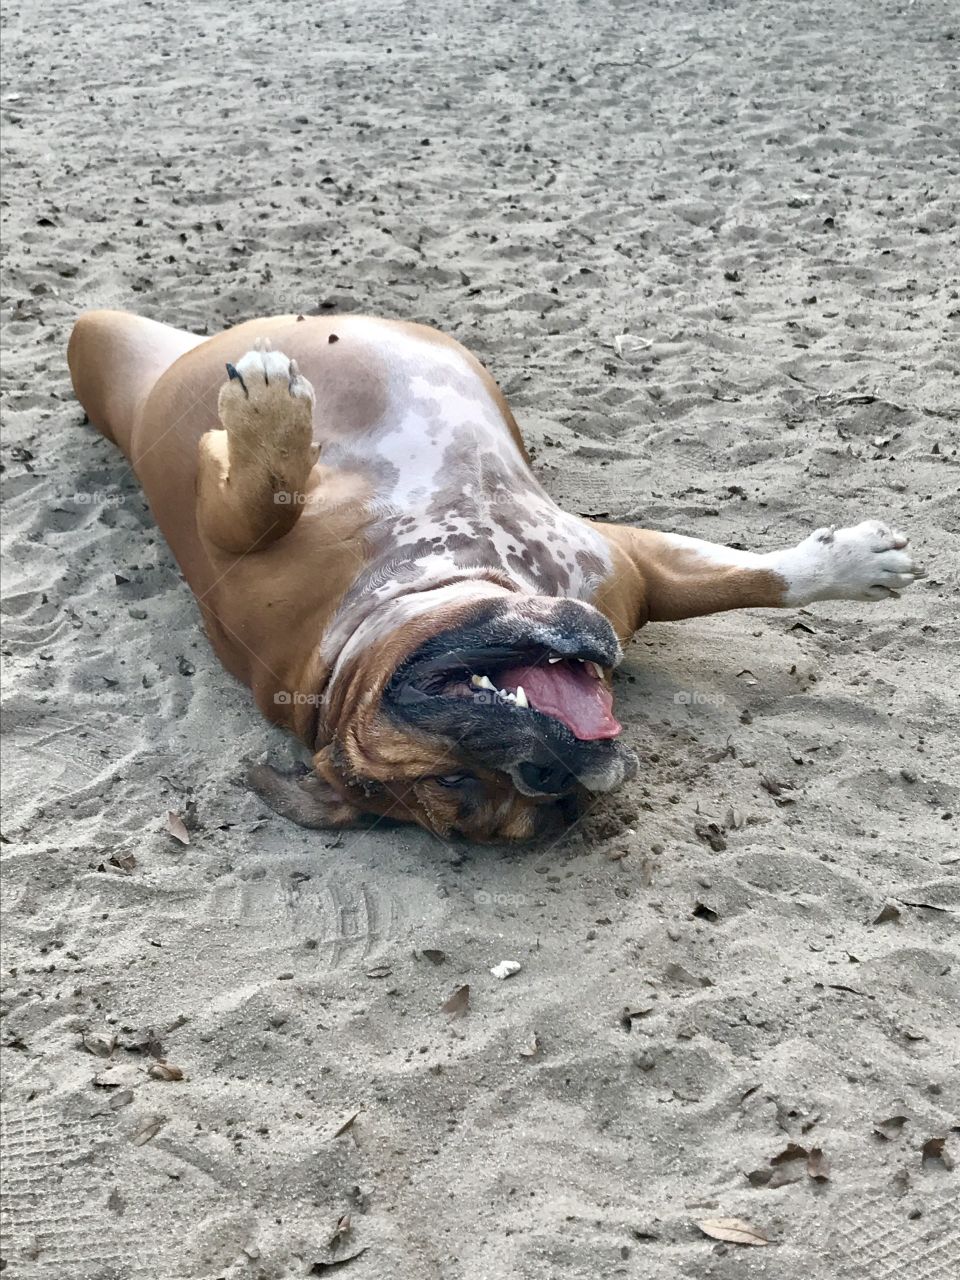 Bulldog loving life at the dog park! ❤️